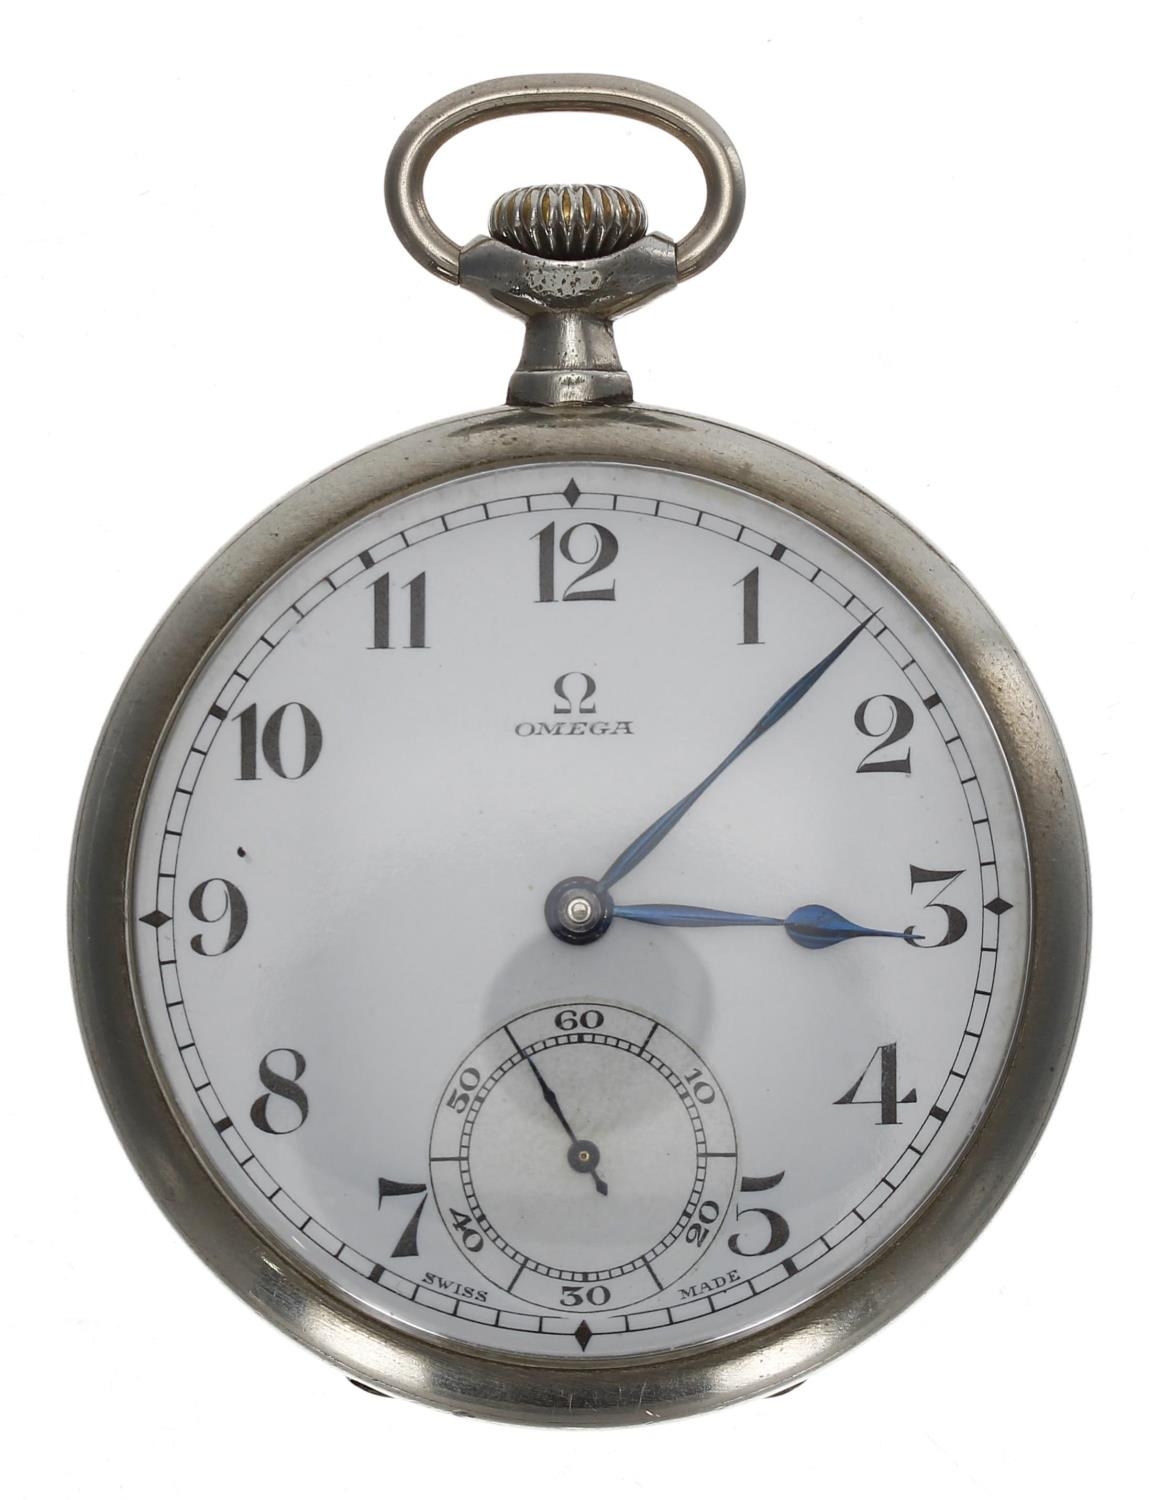 Omega - nickel cased lever pocket watch, case no. 6905179, serial no. 7671xxx, circa 1930's, - Image 2 of 4